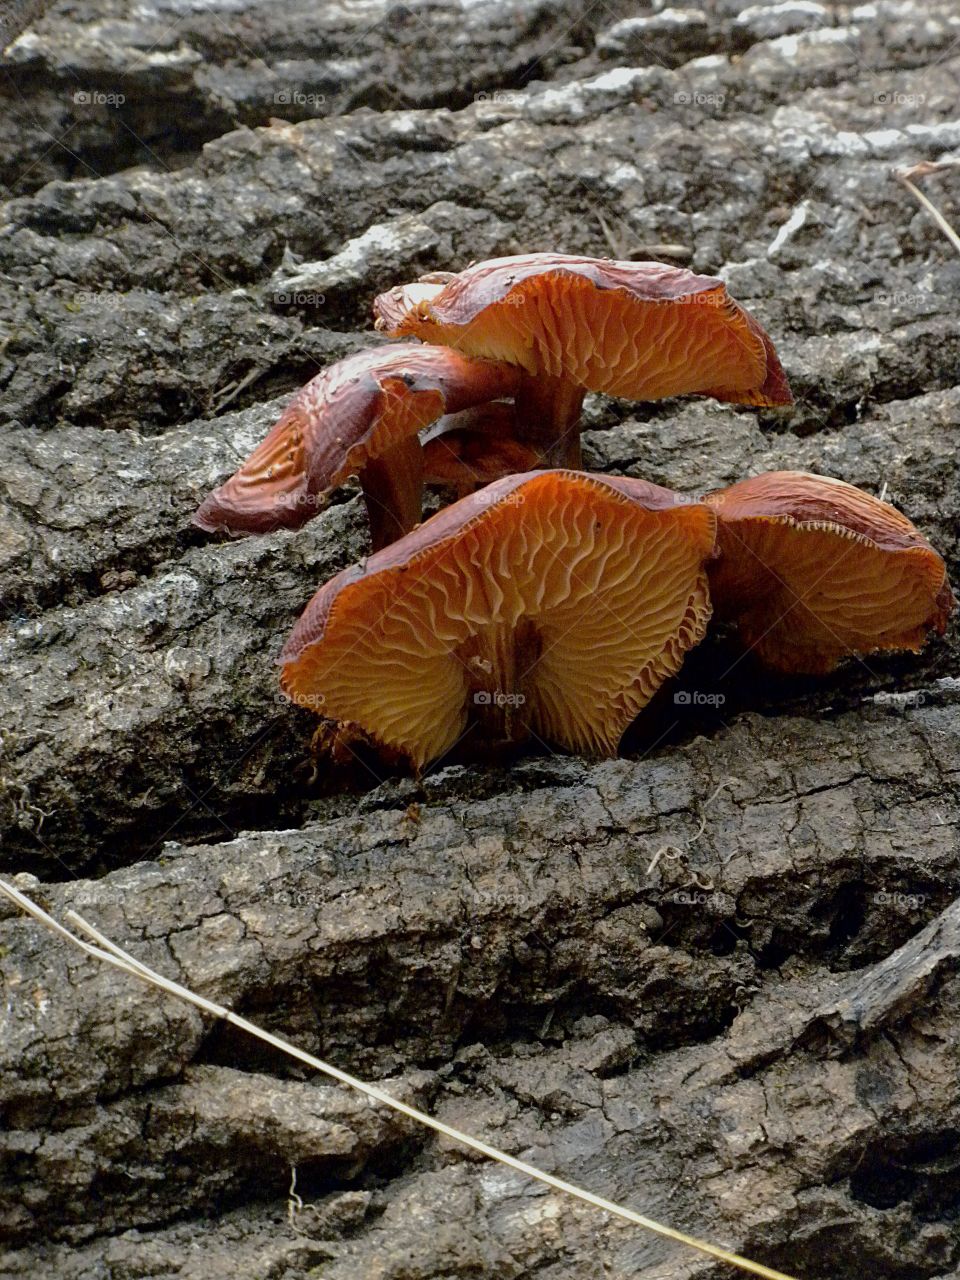 Tangerine fungus